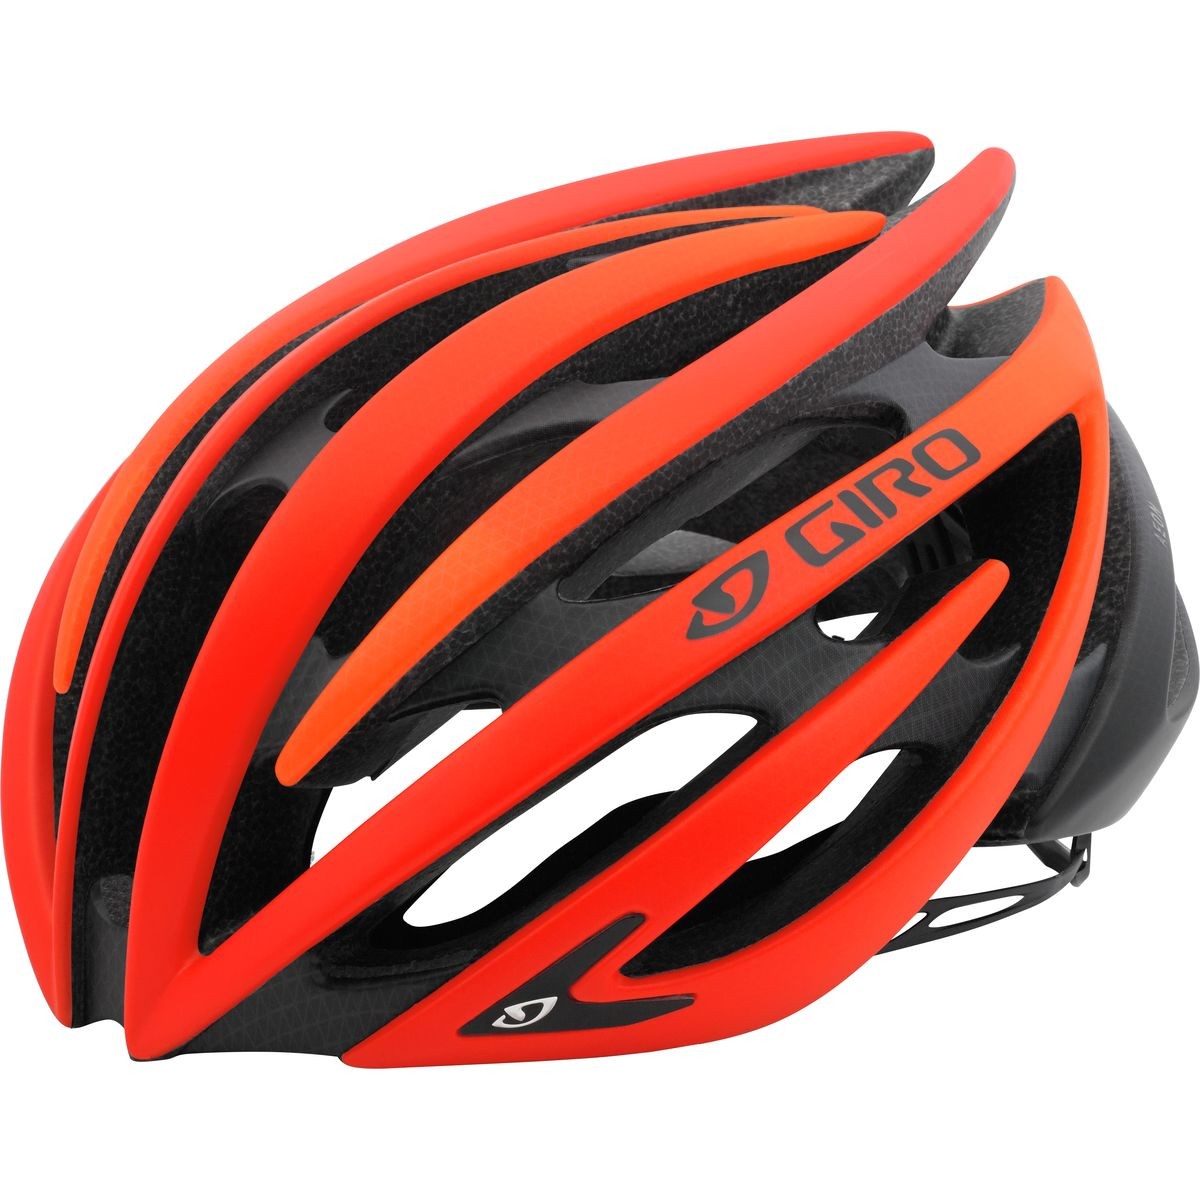 giro aeon road bike helmet review